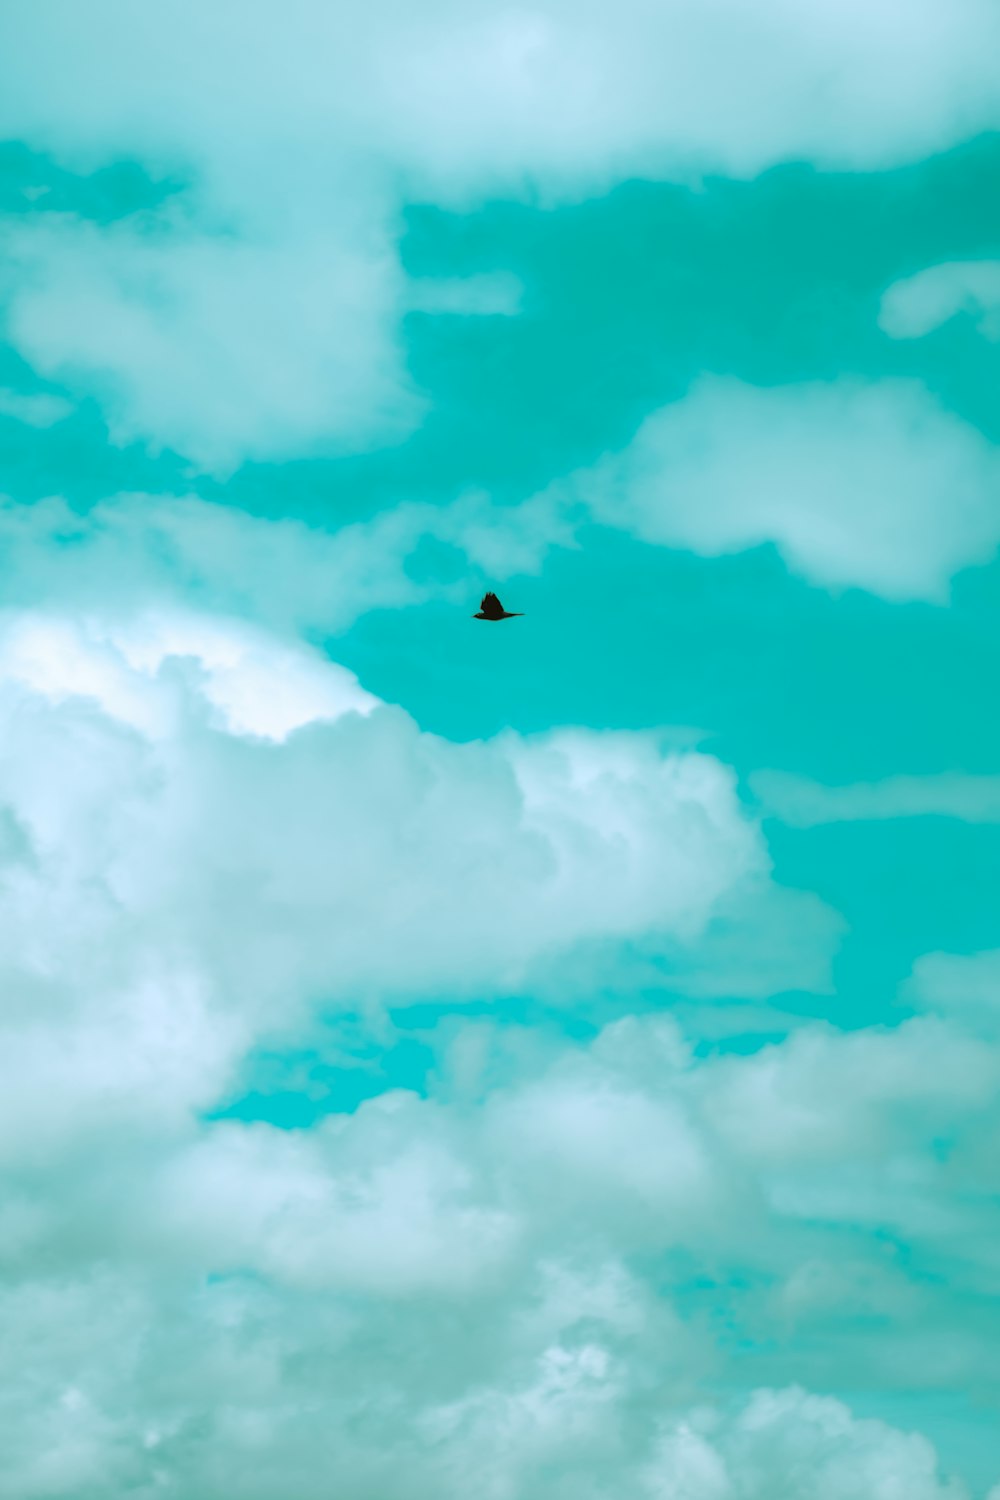 a bird flying through a cloudy blue sky